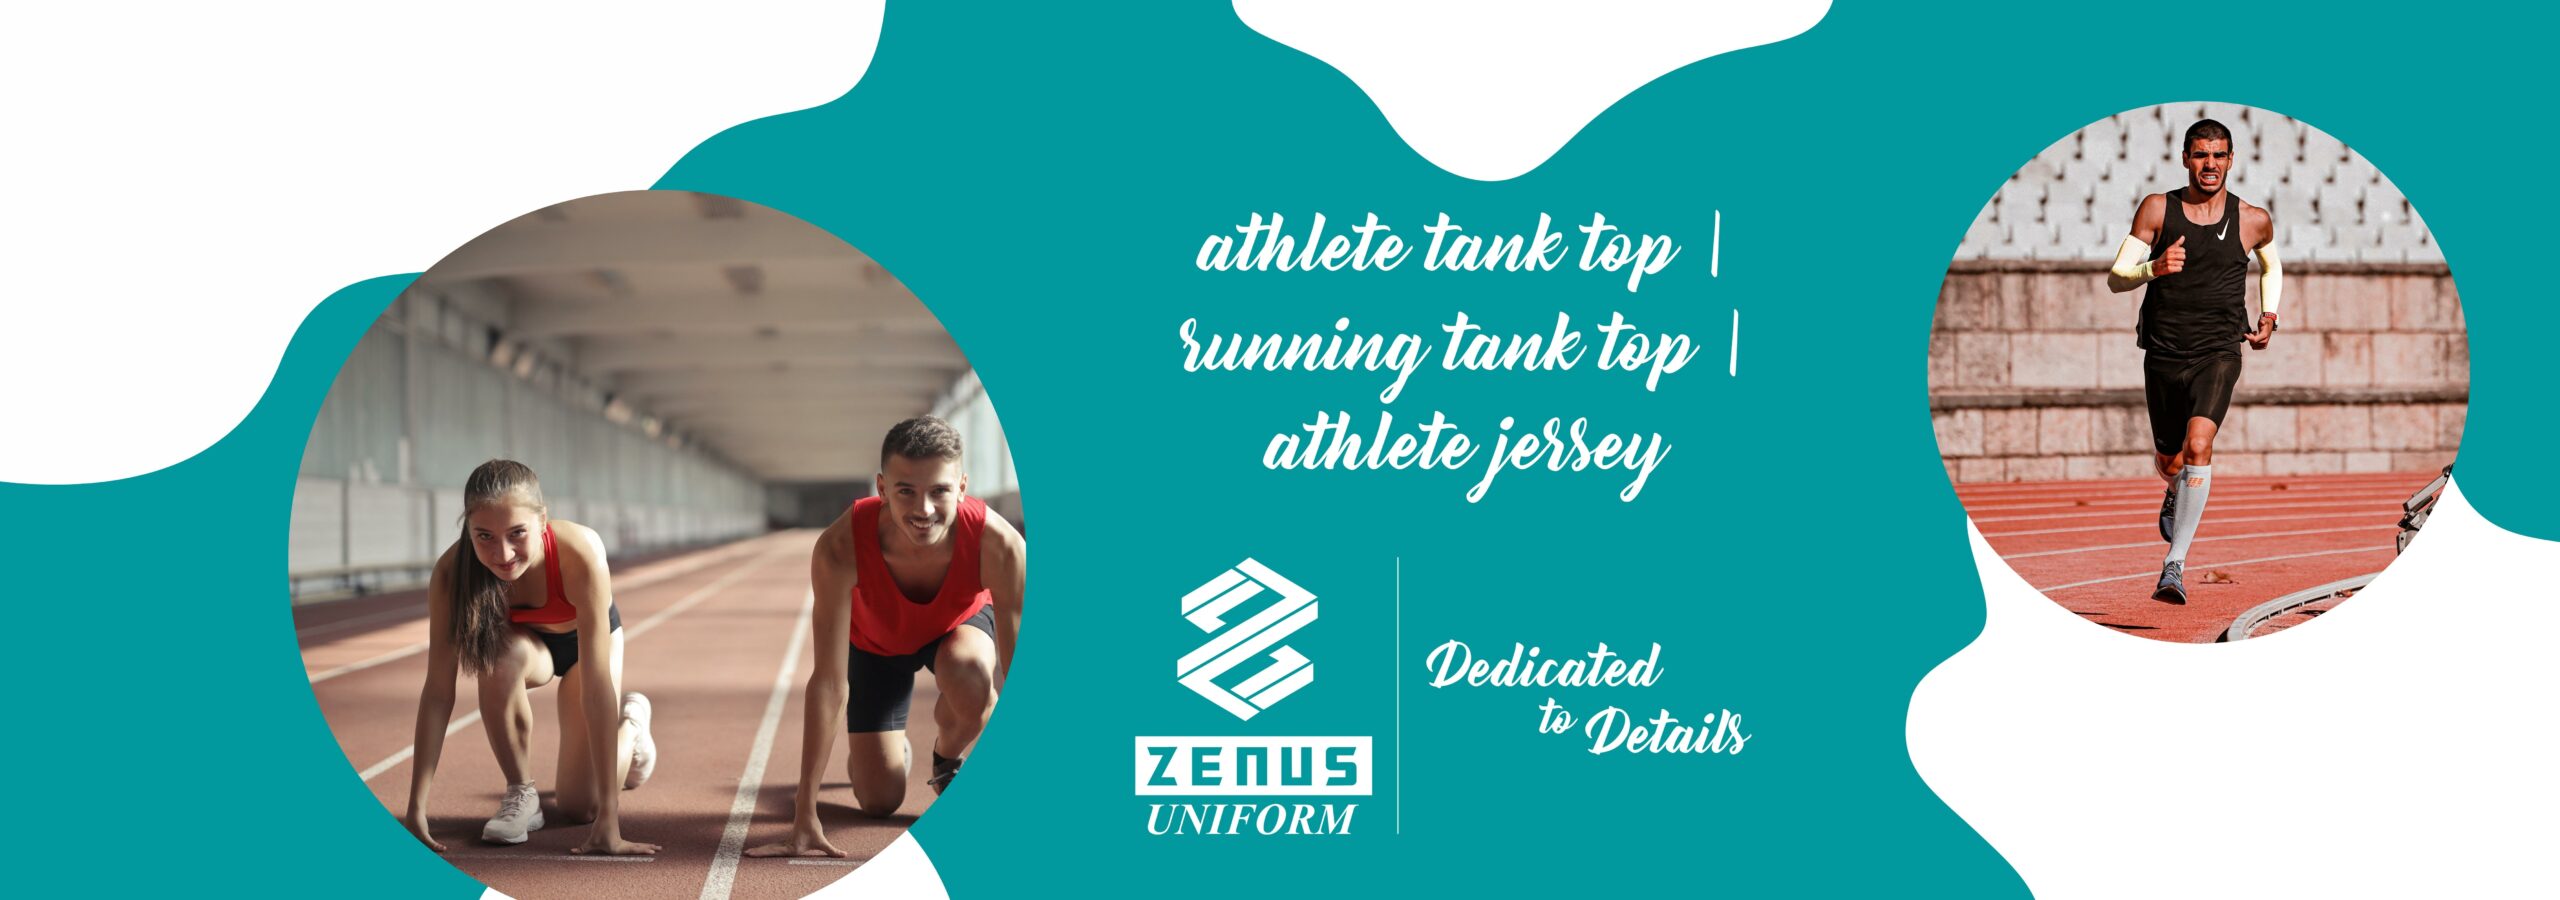 athlete tank top，running tank top，athlete jersey banner